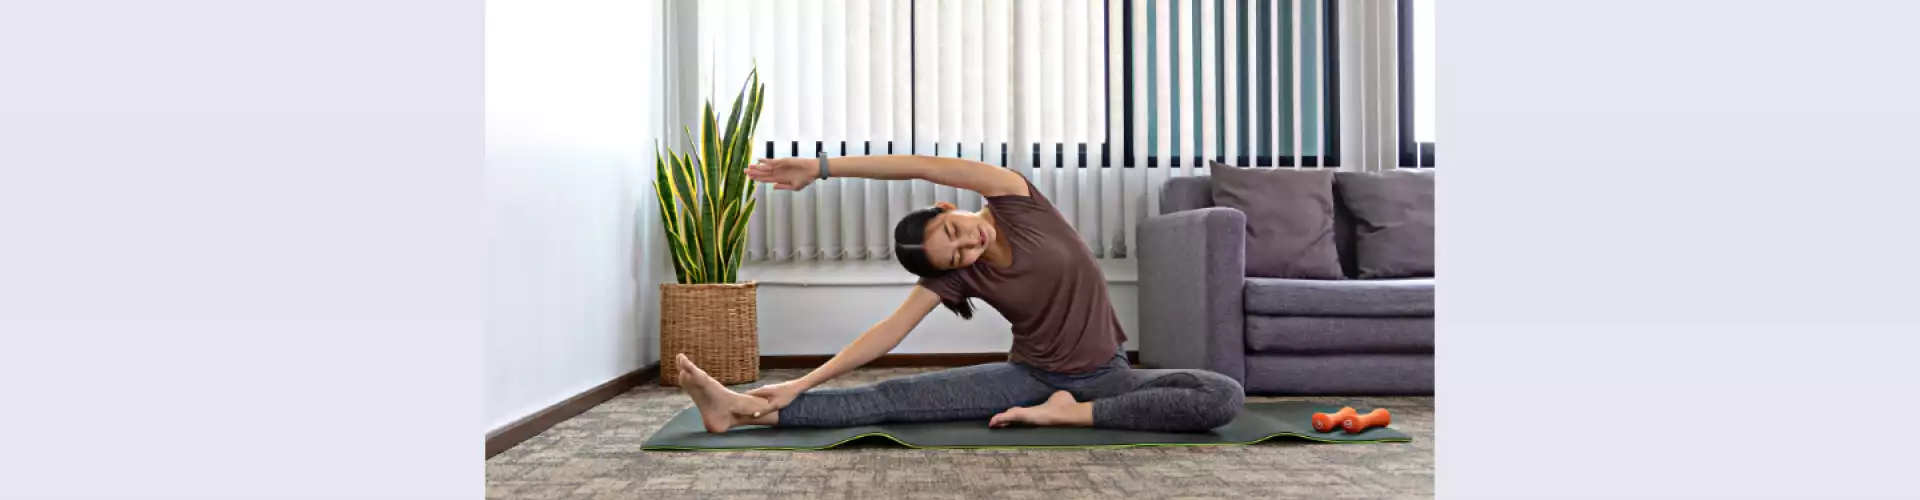 Yoga suave